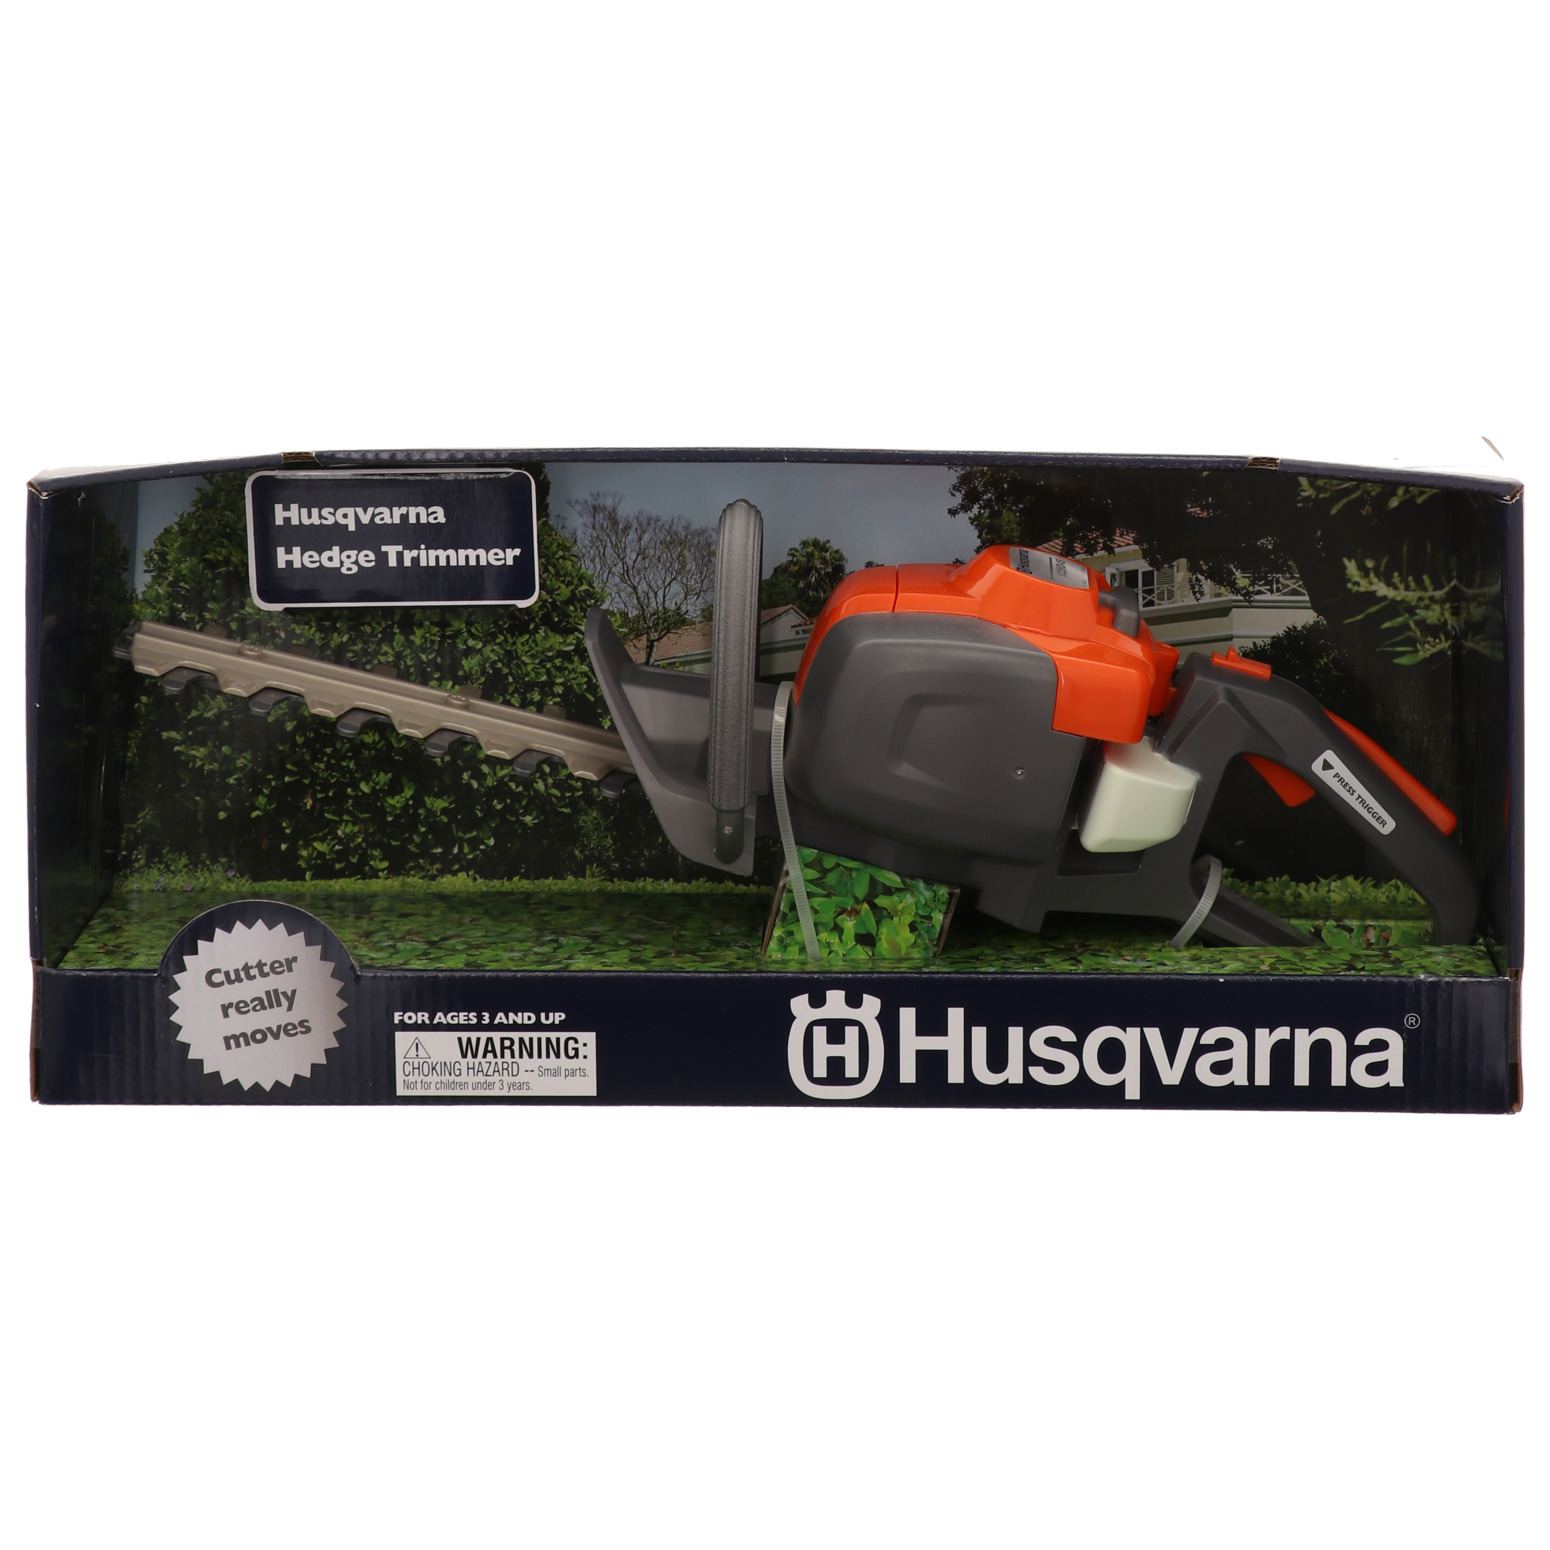 Husqvarna Spielzeug-Kettensäge 550 XP Kit mit Sound